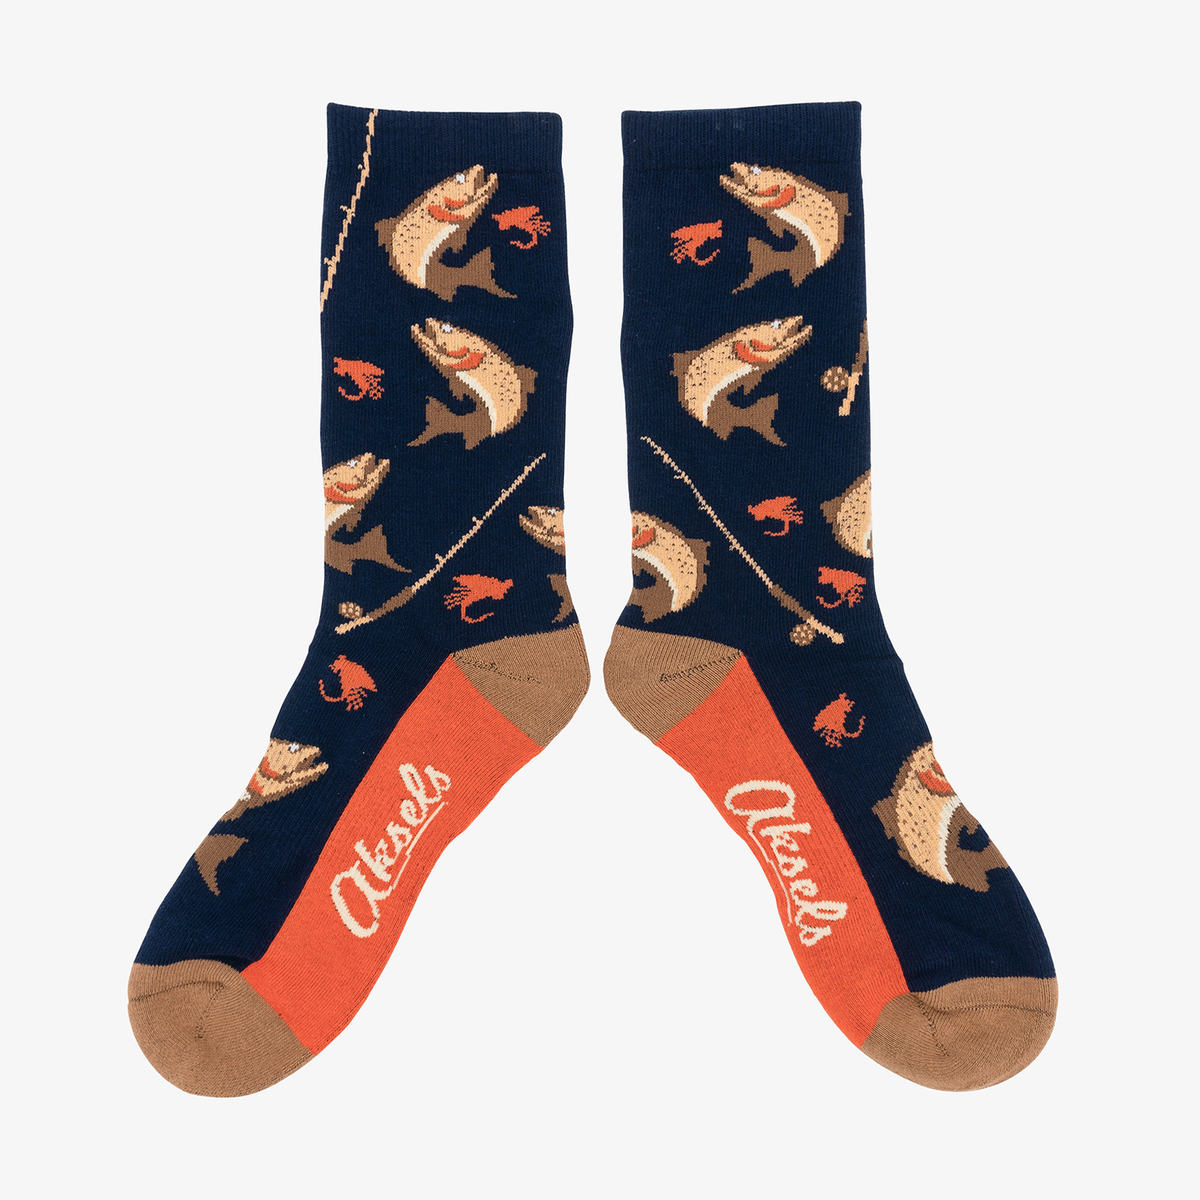 Men's Fish Socks